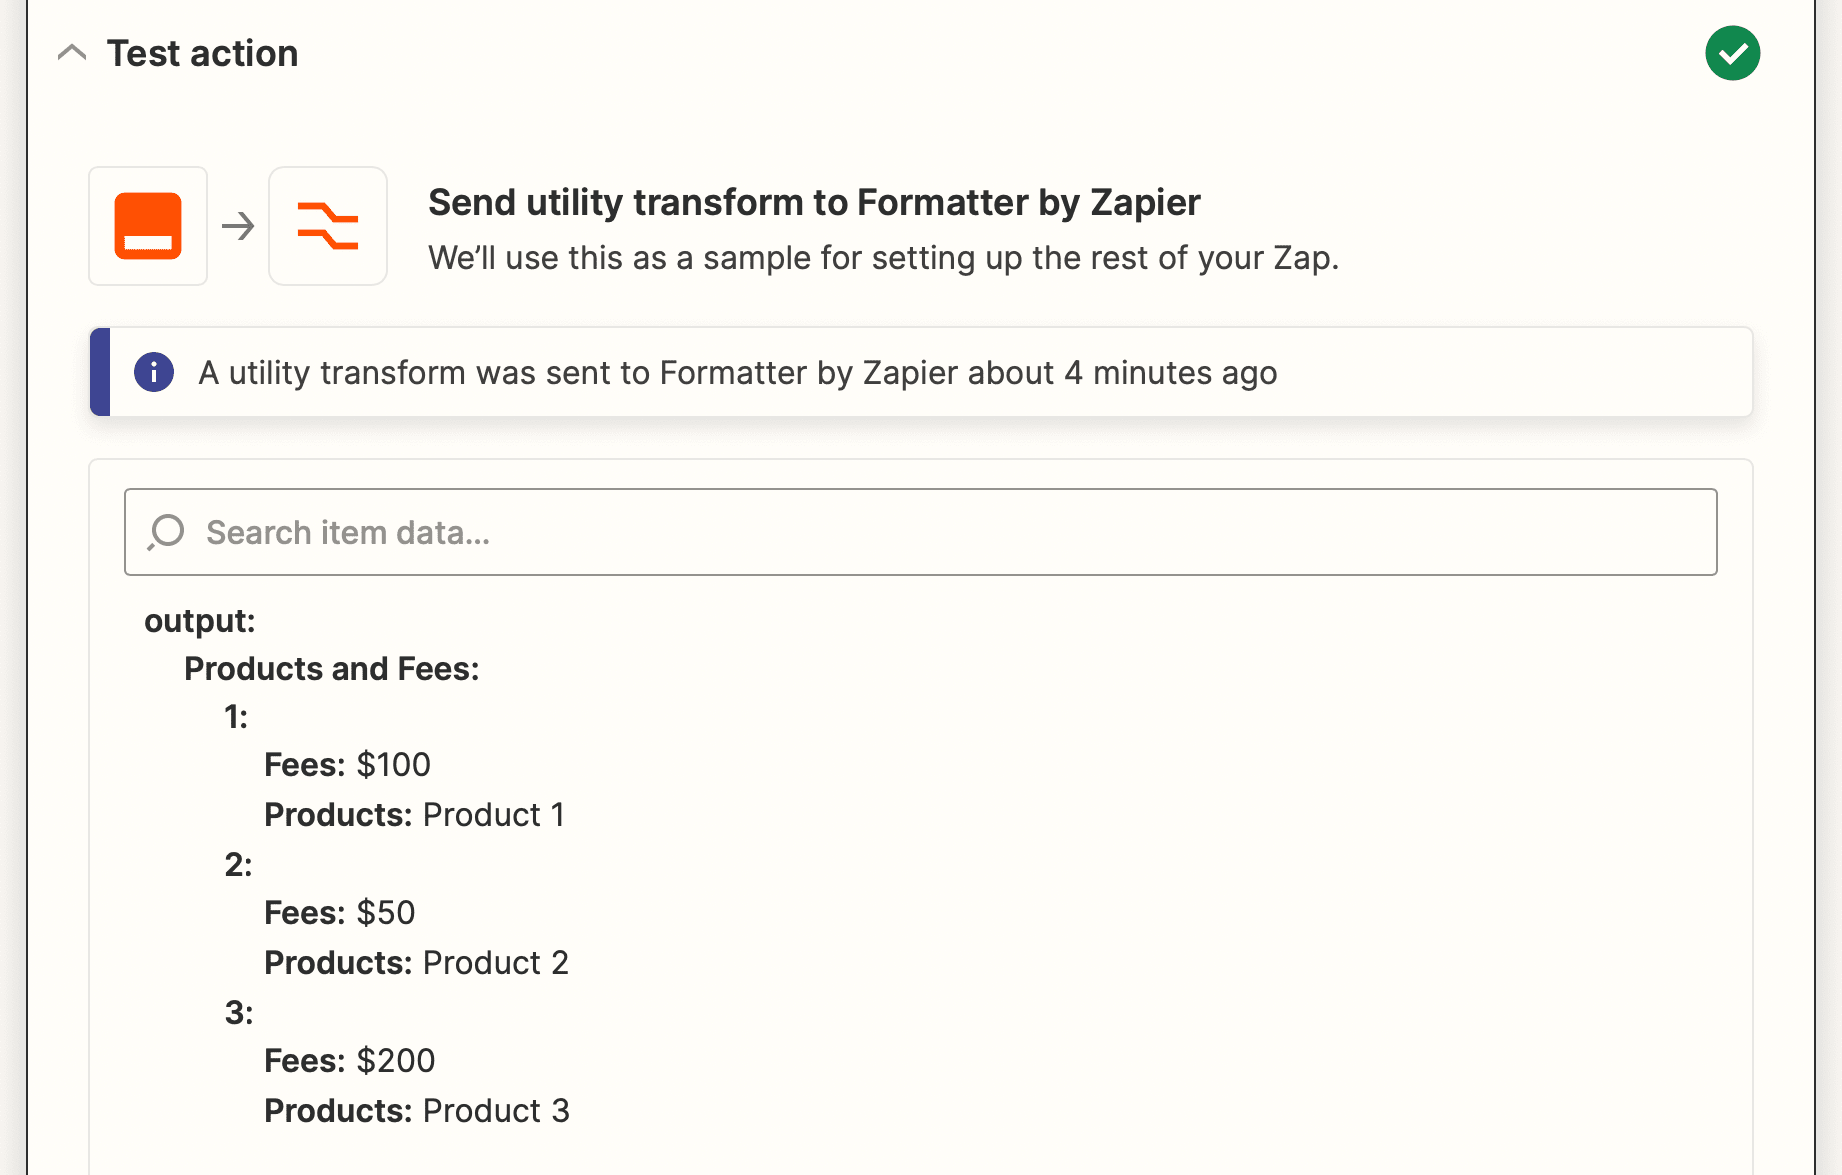 Screenshot of Zapier utility transform test with itemized data